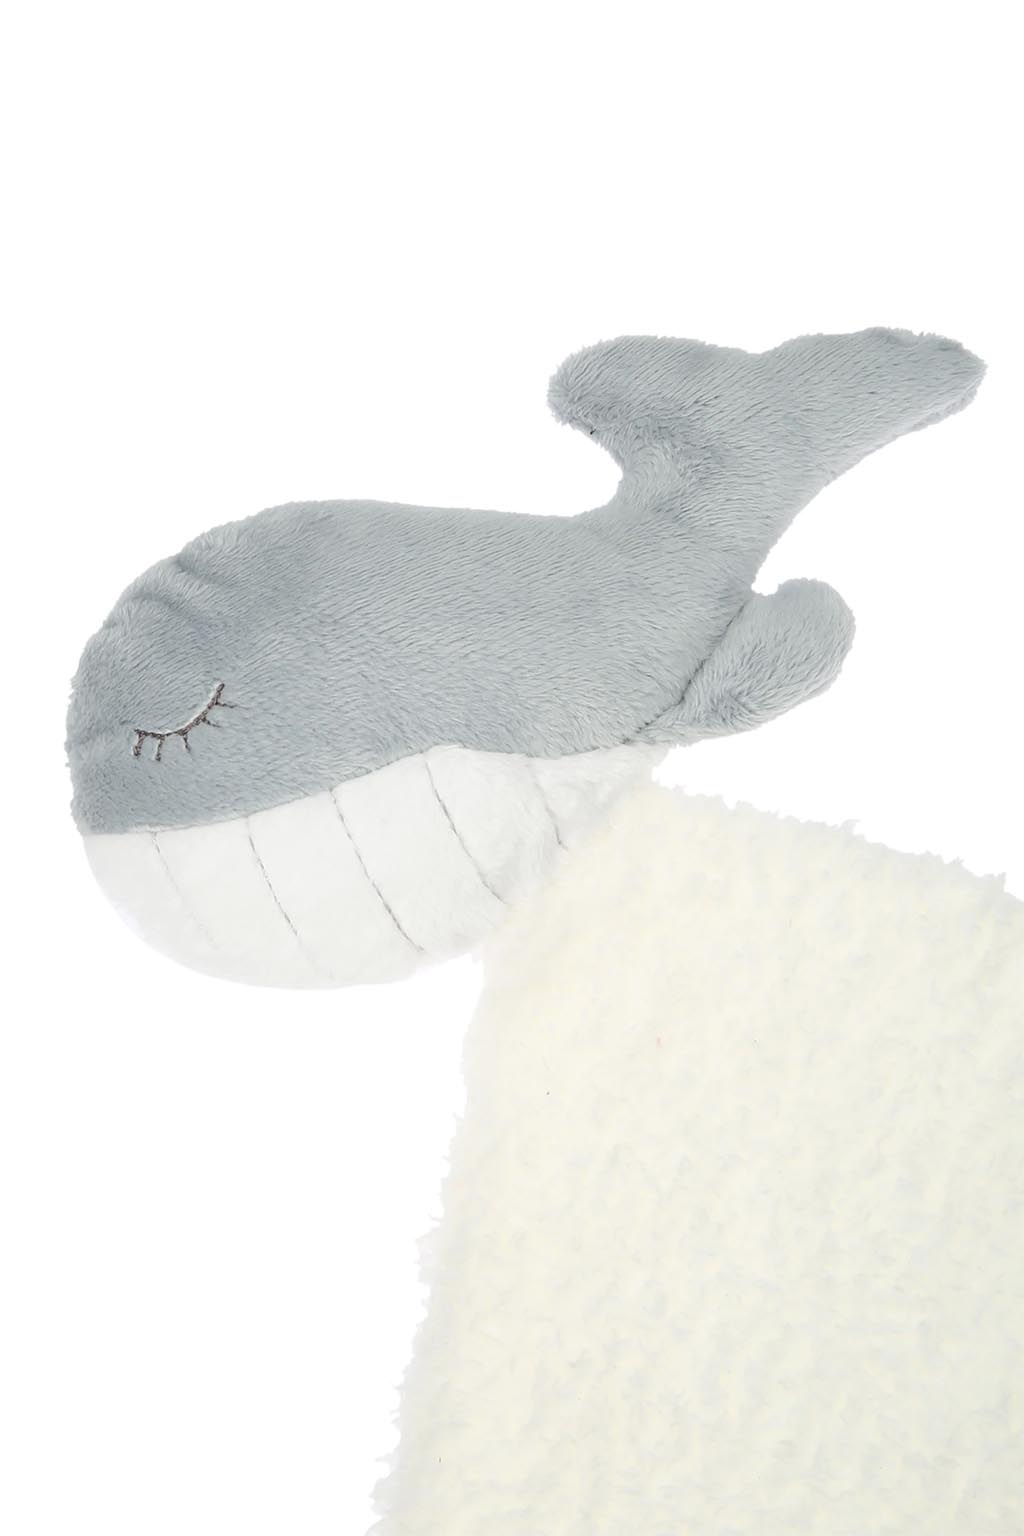 Knit Blankie Whale